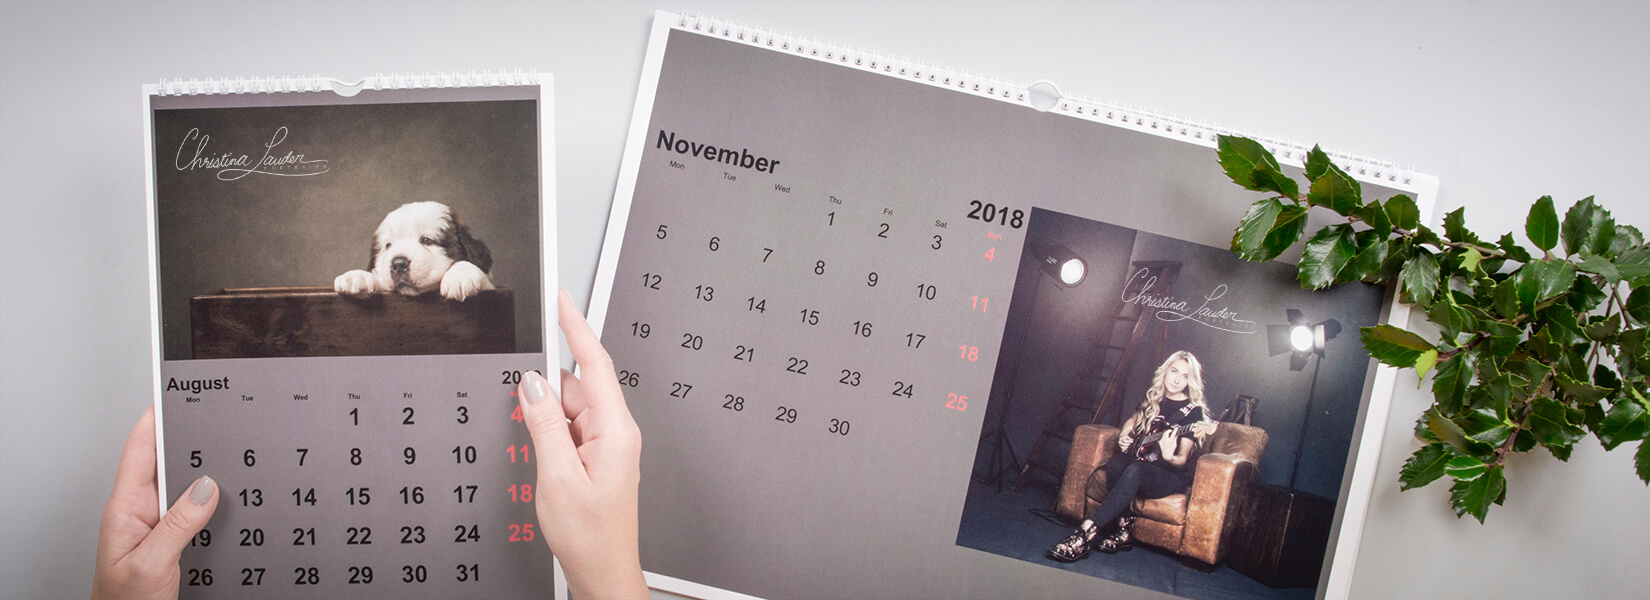 Photo Calendar Basic Professional Printing Services nPhoto Lab